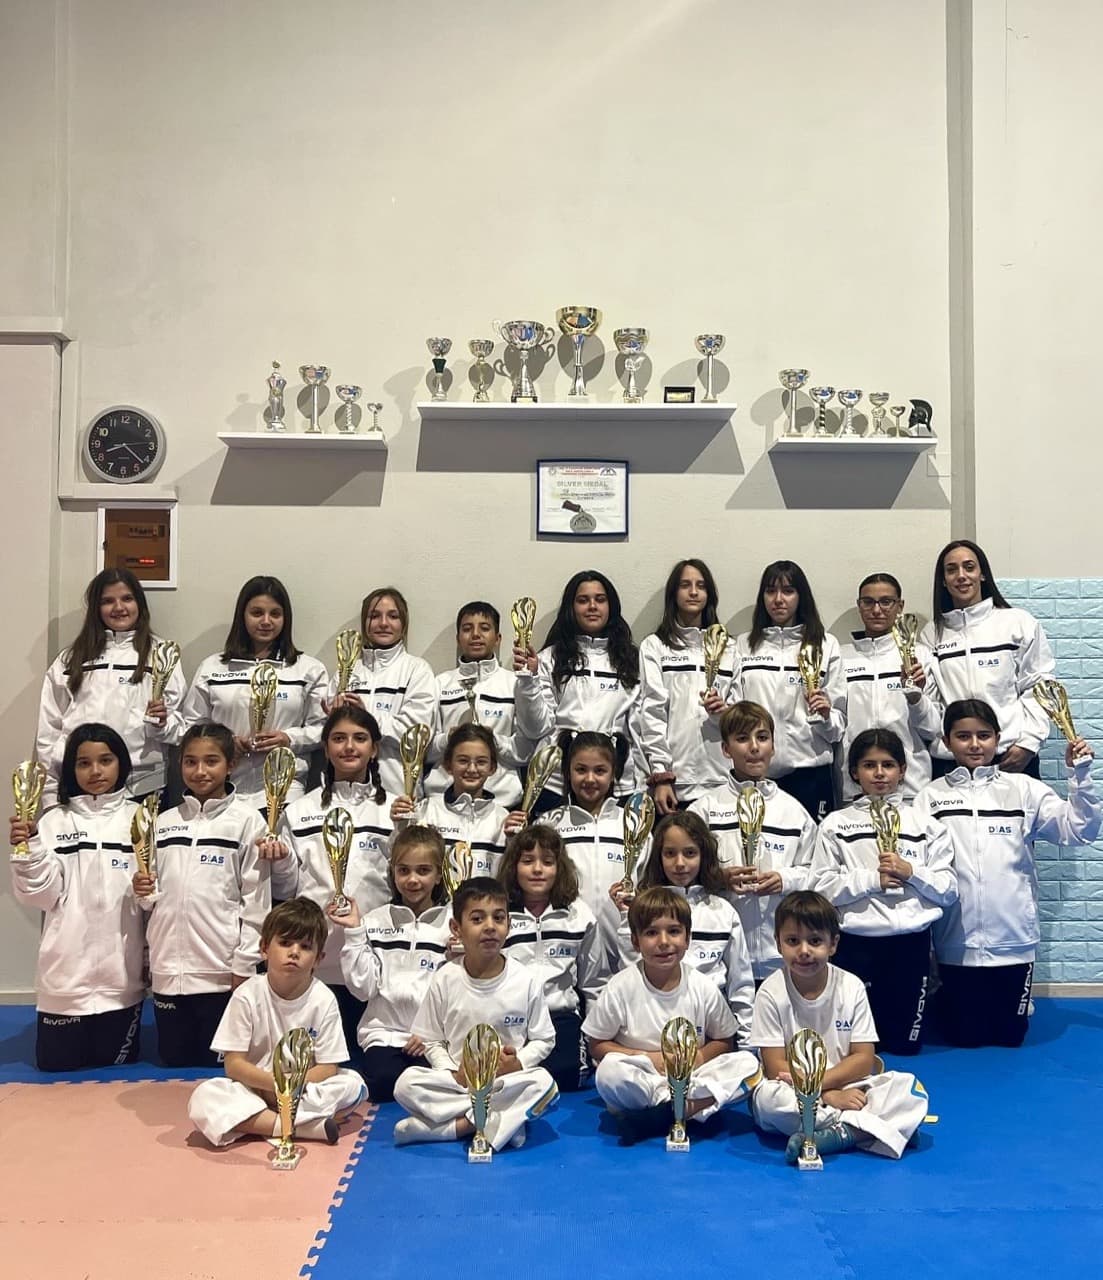 dias-kalamatas-taekwondo-sportshunter11